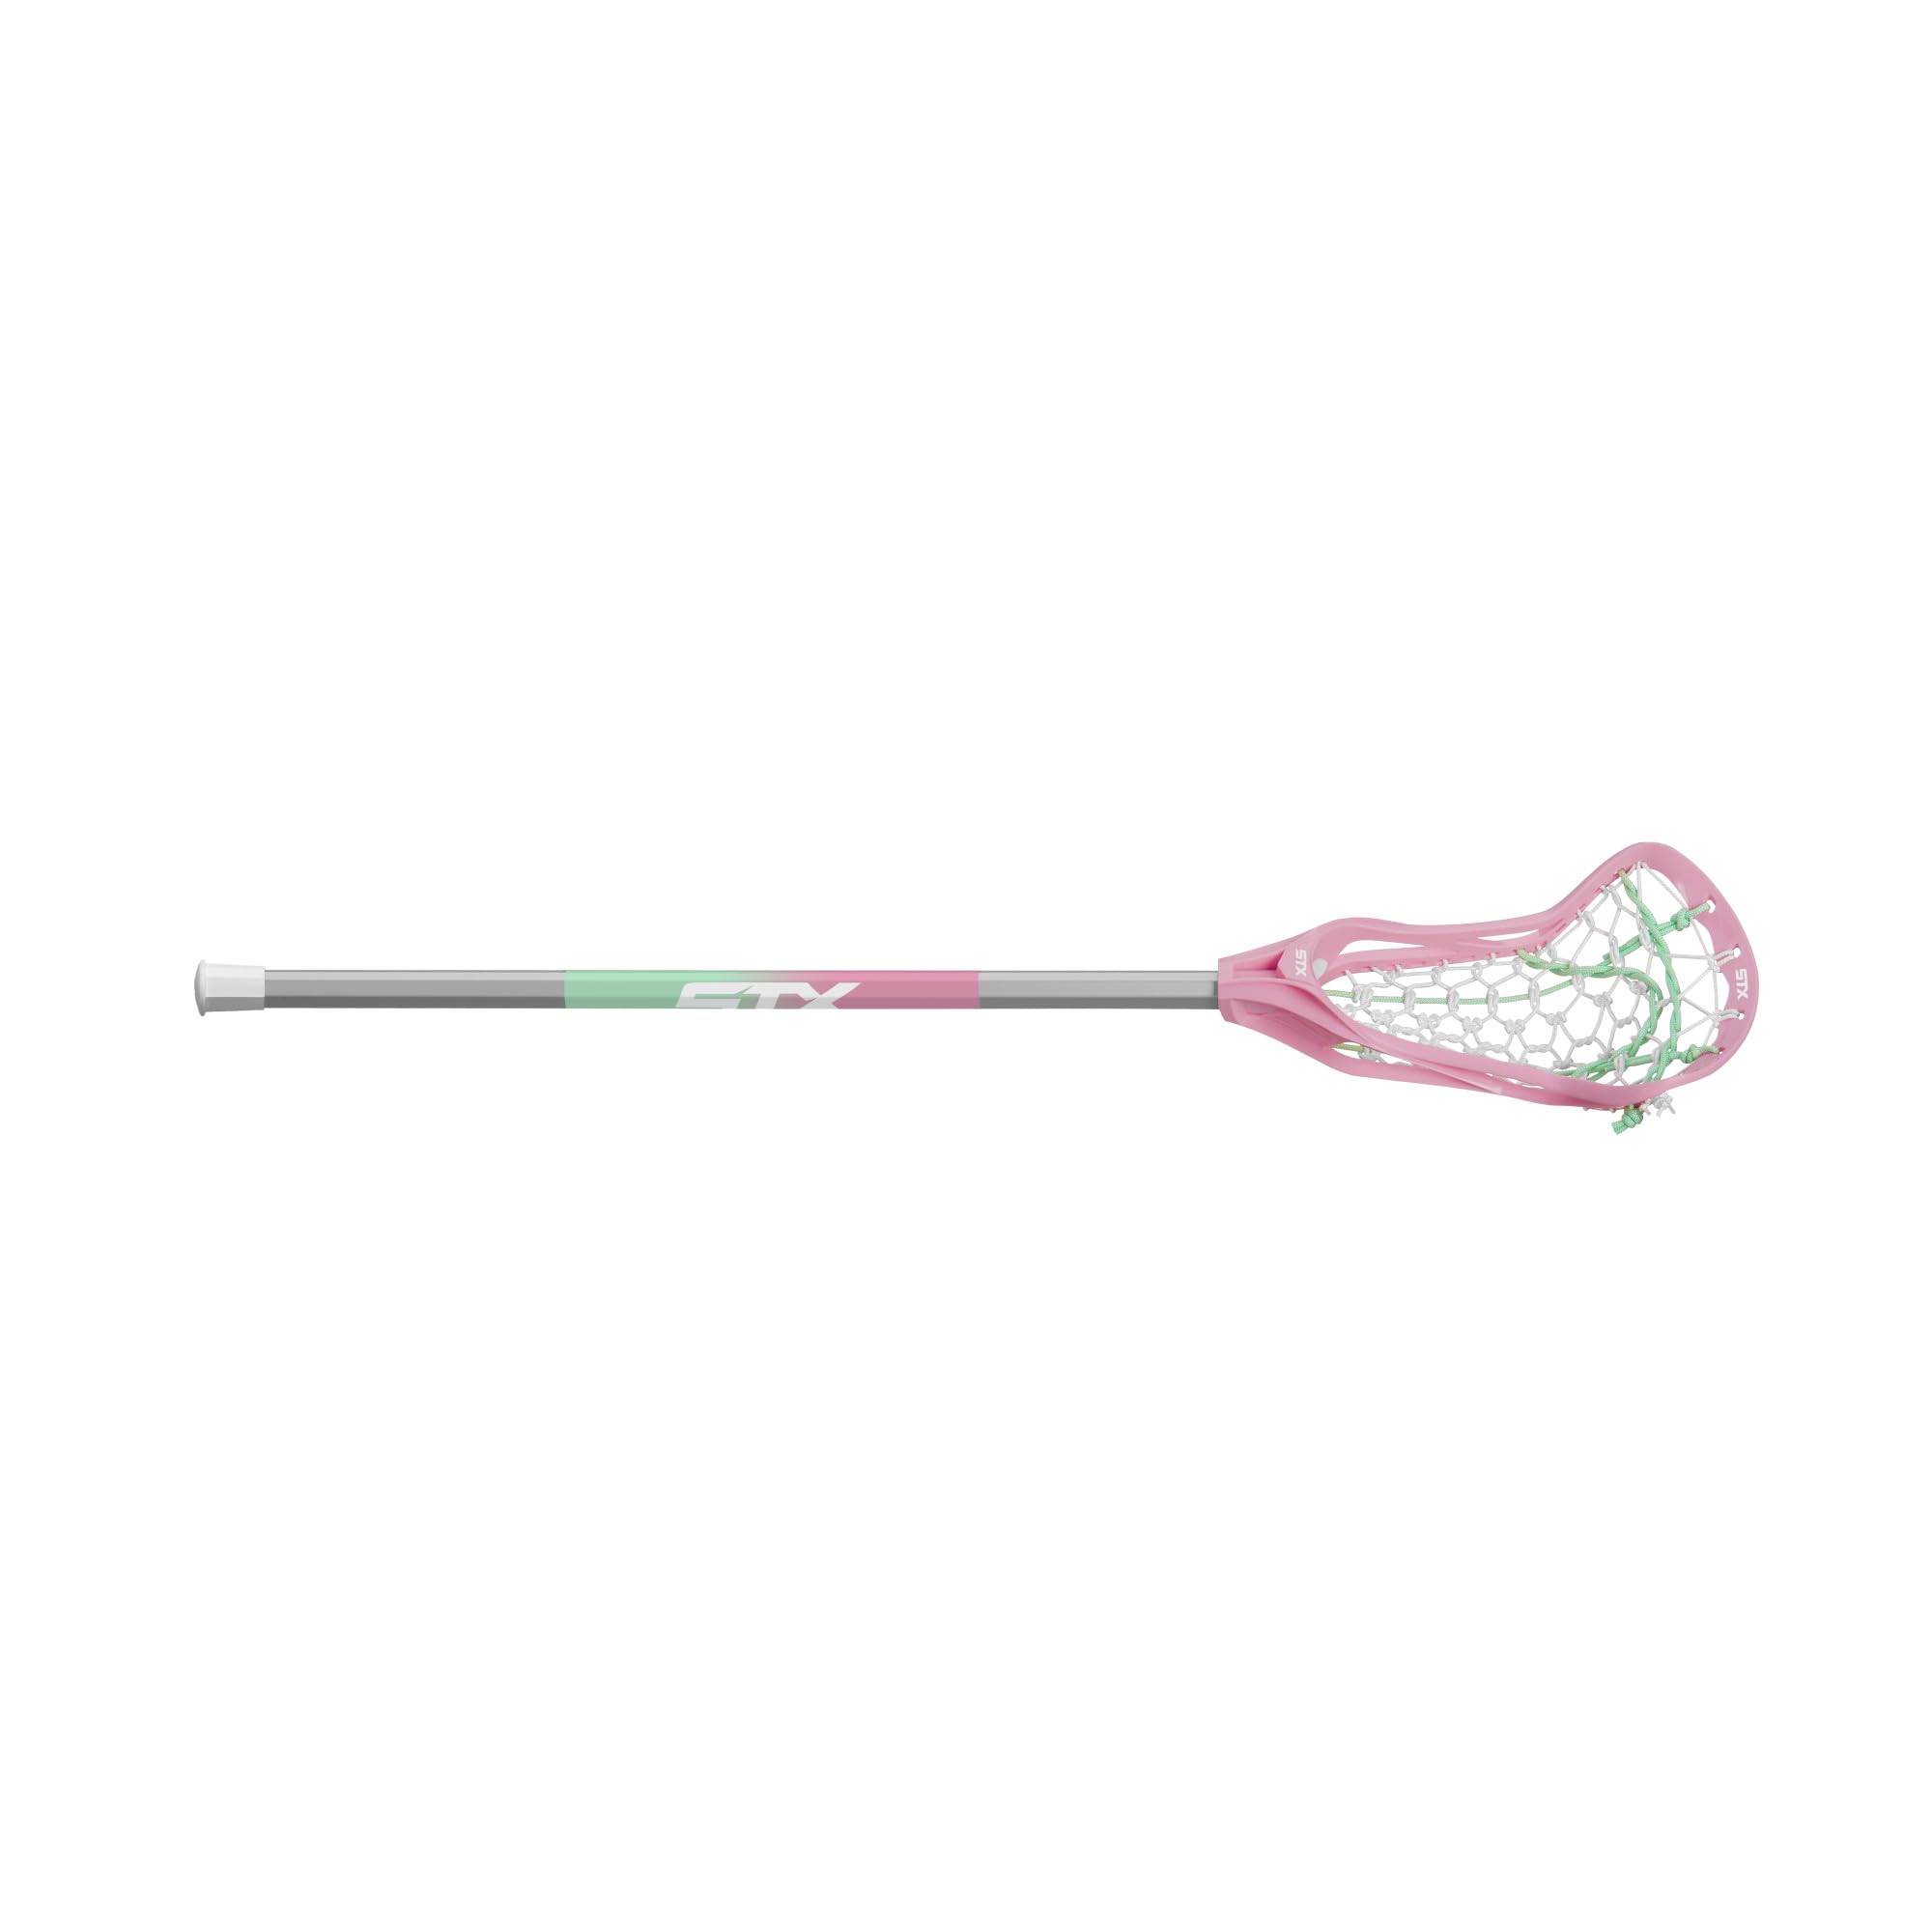 STX Lacrosse Girls Crux Jr. Complete Stick